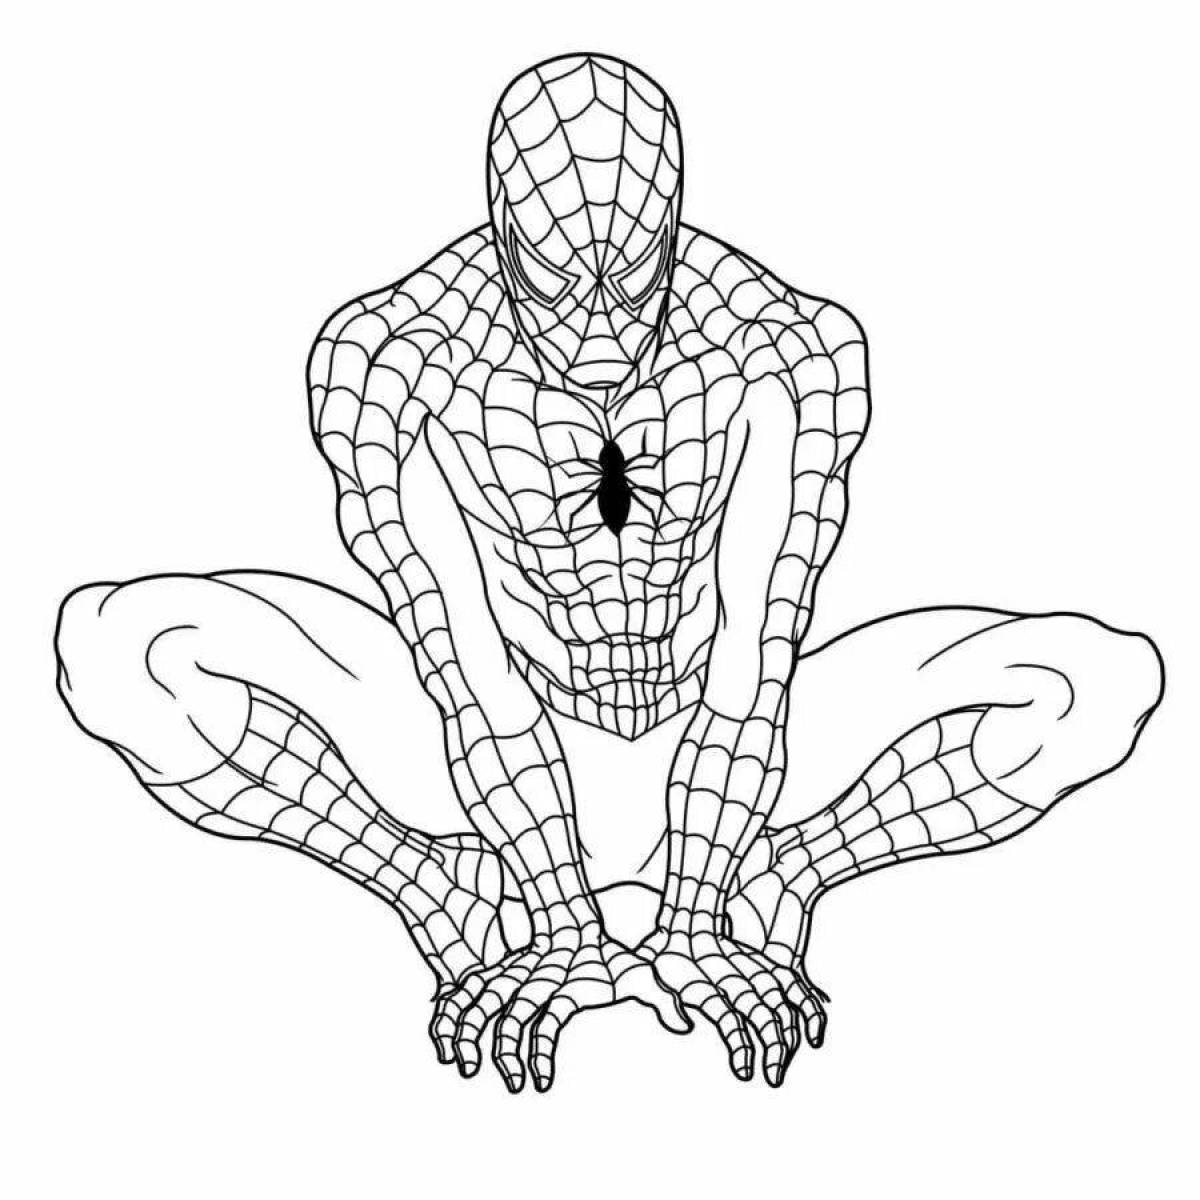 Spider-man creative coloring book